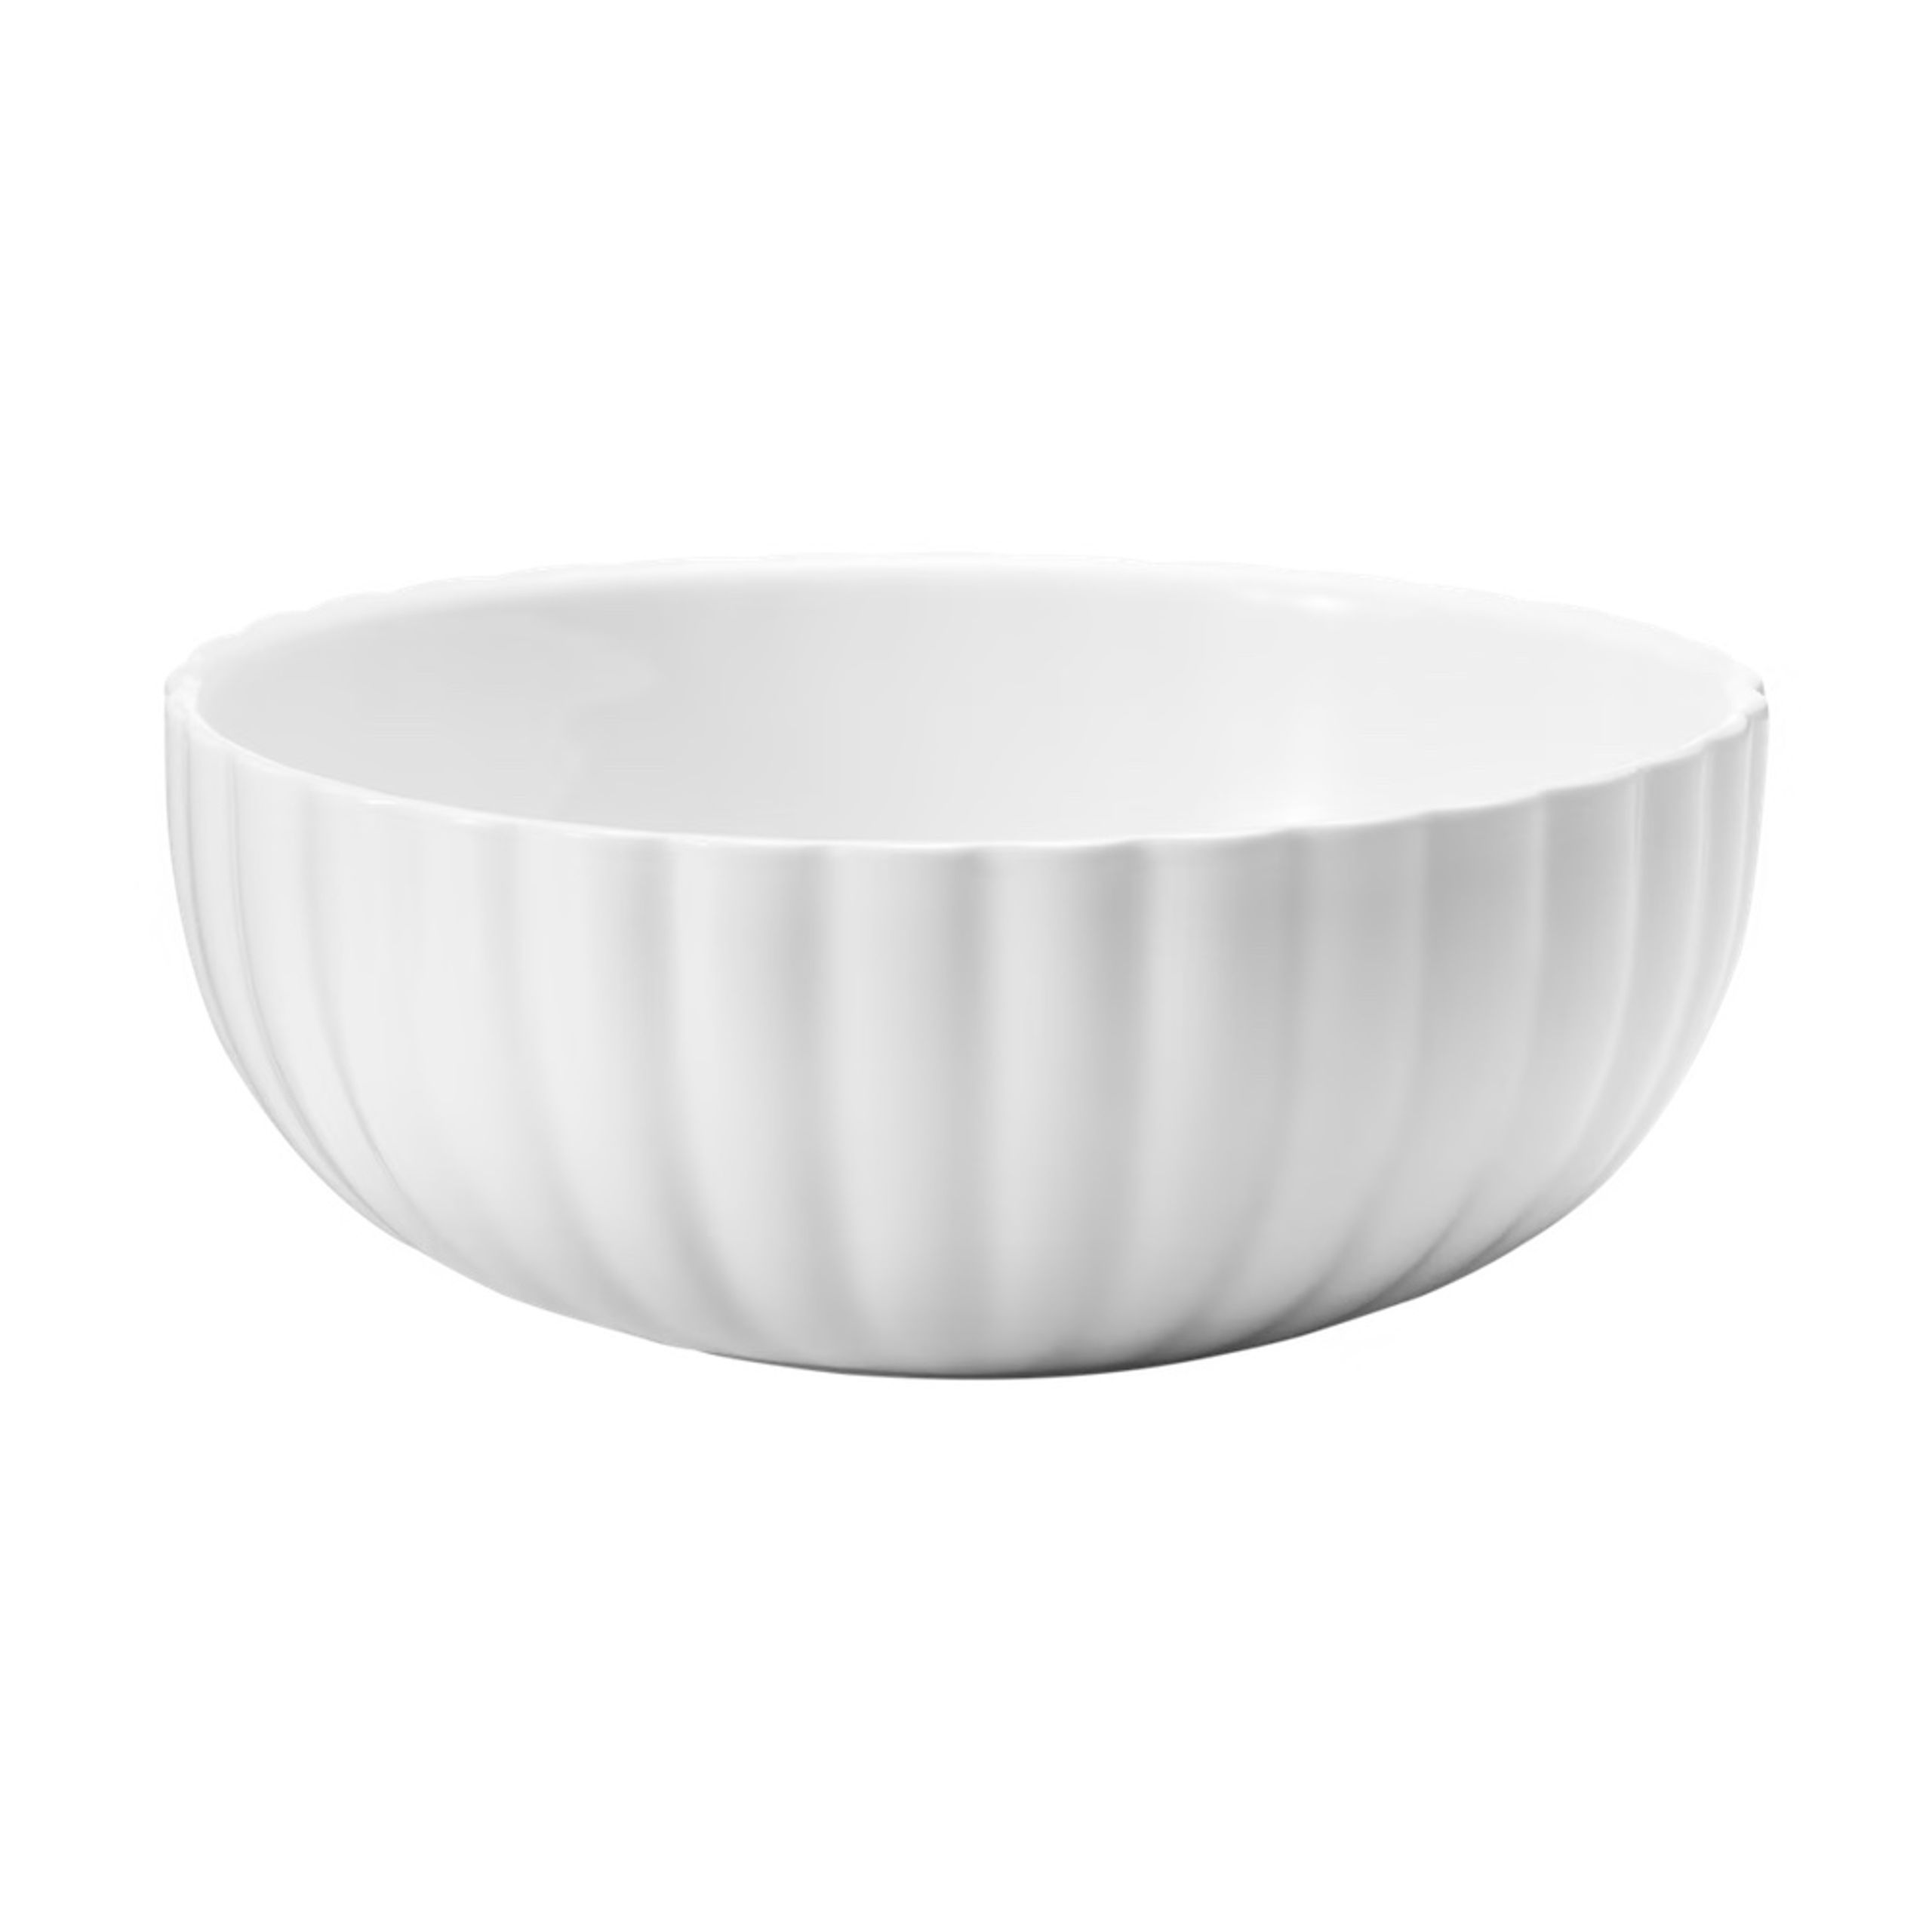 Georg Jensen - Schüssel - Bernadotte Breakfast/all Purpose Bowl  - White - Porcelain